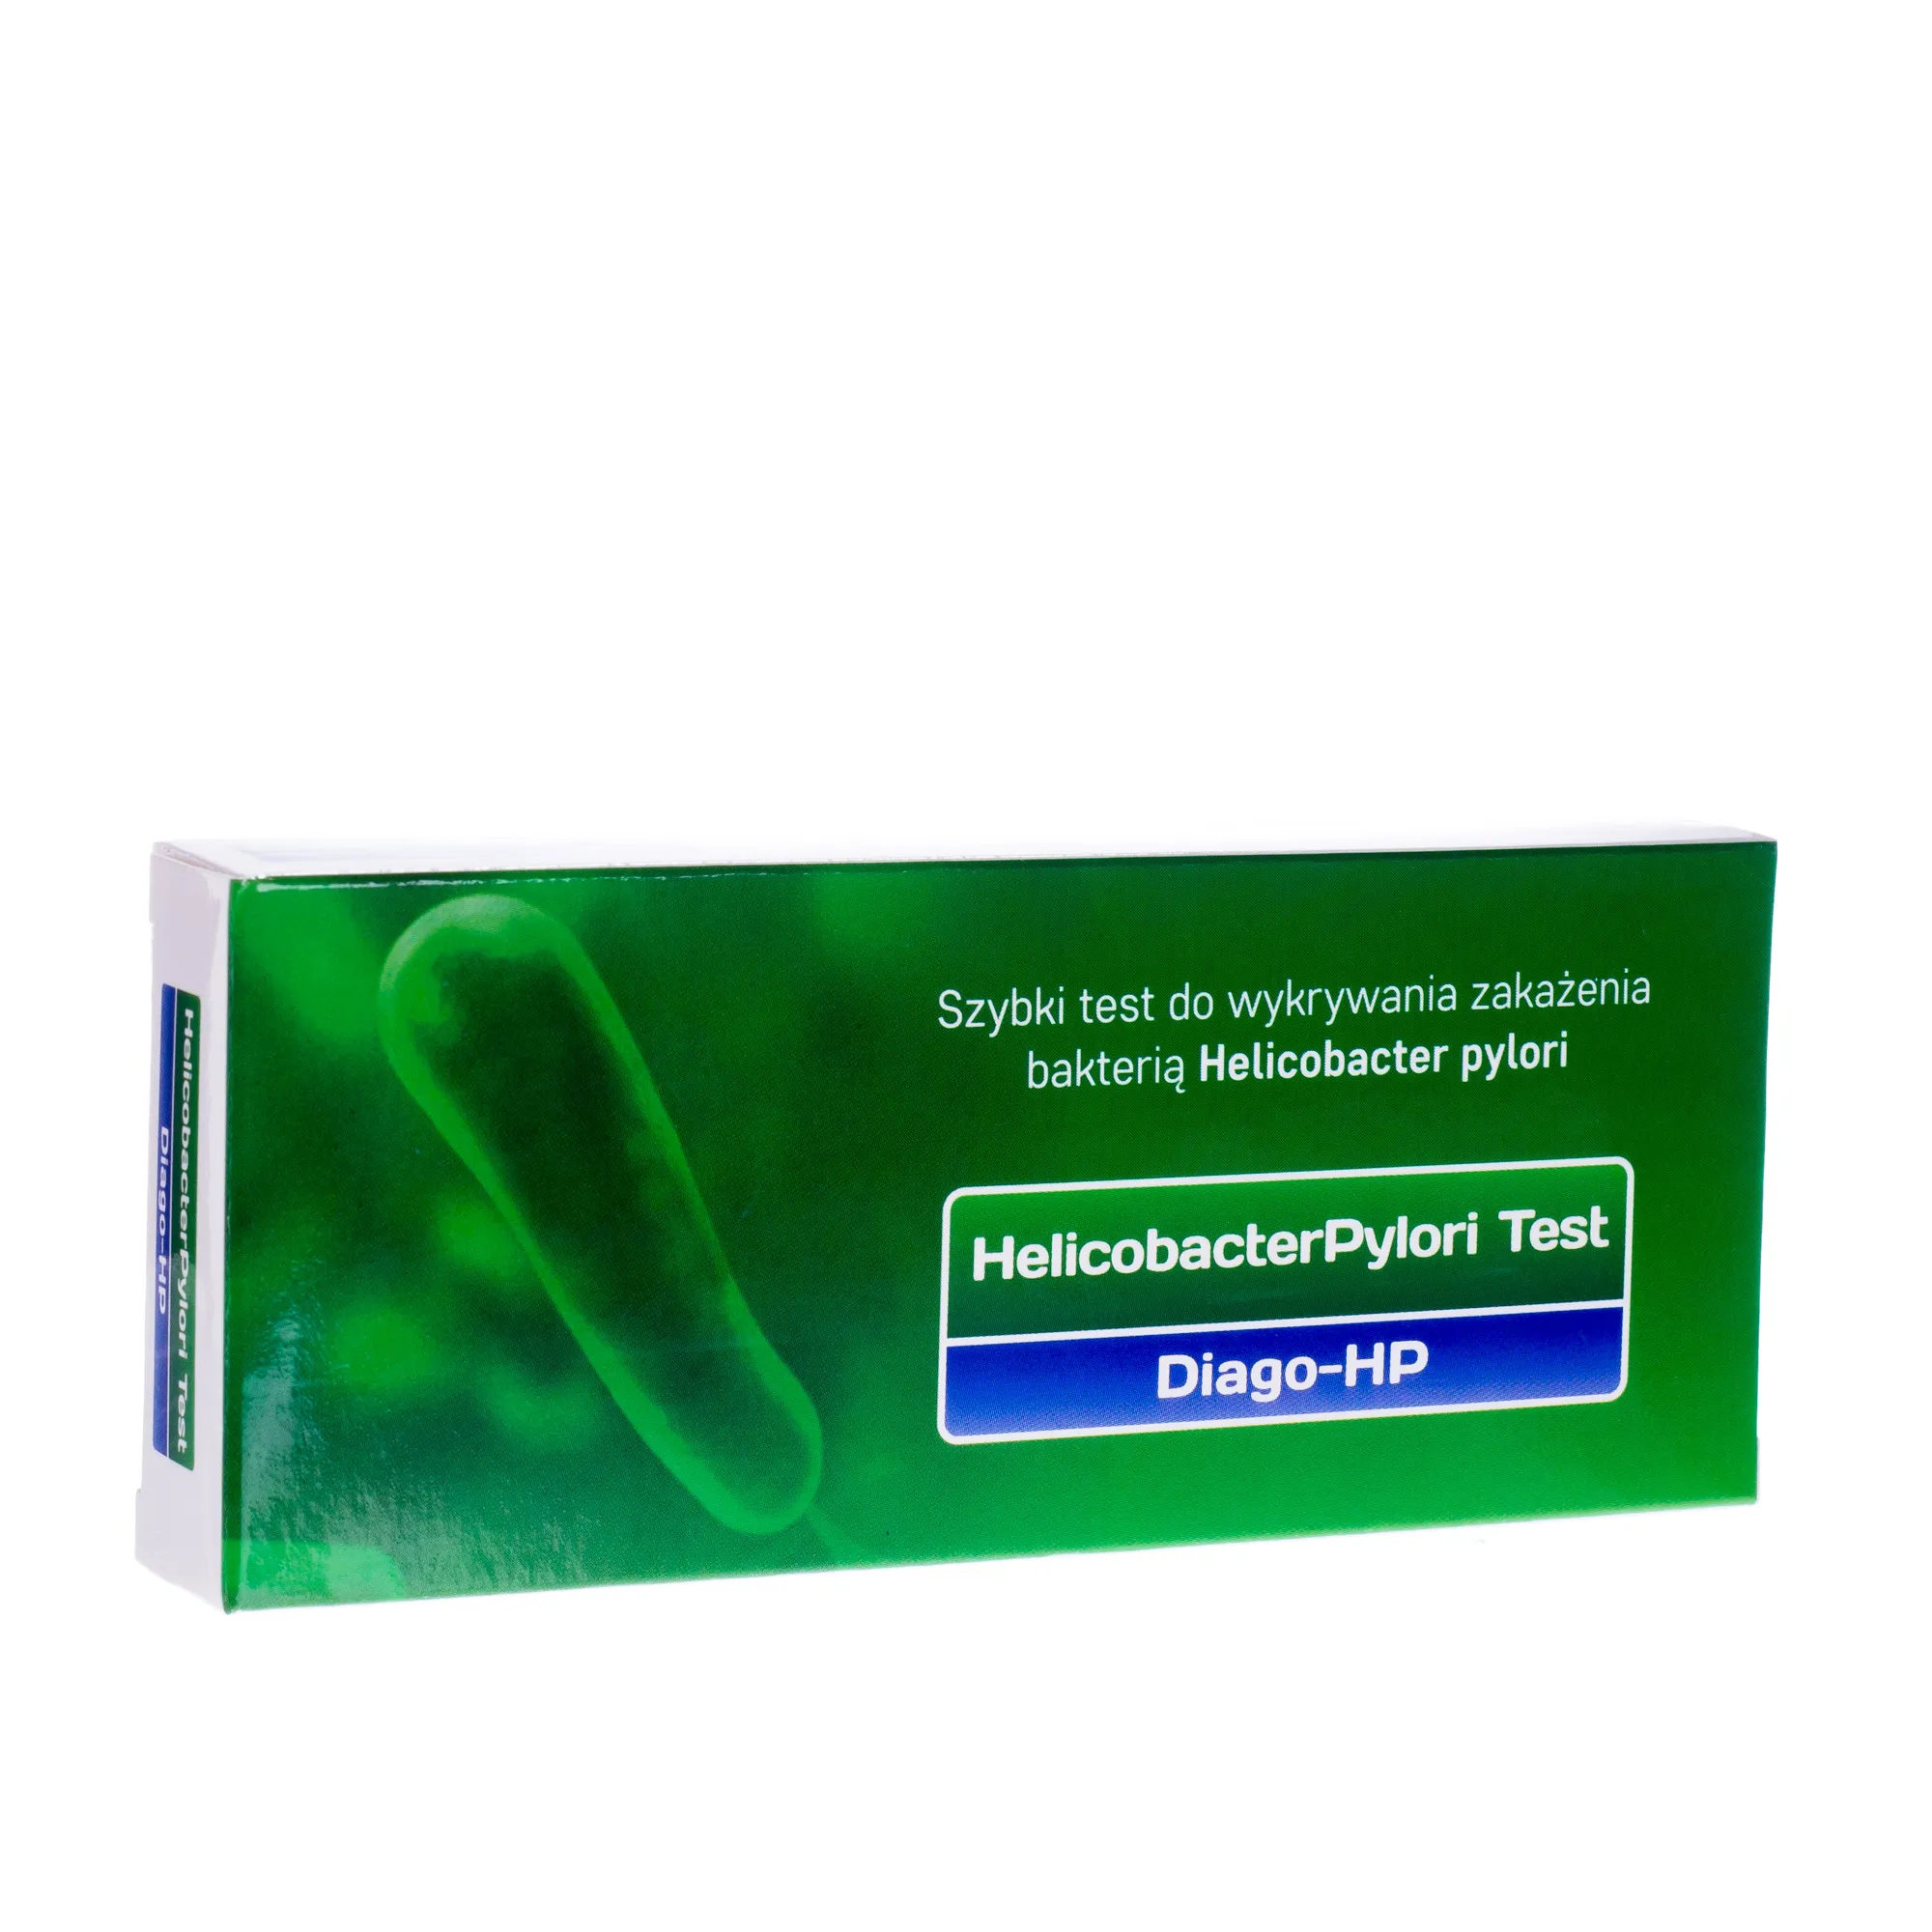 Diago-HP test Heliobacter Pylori, 1 szt. 